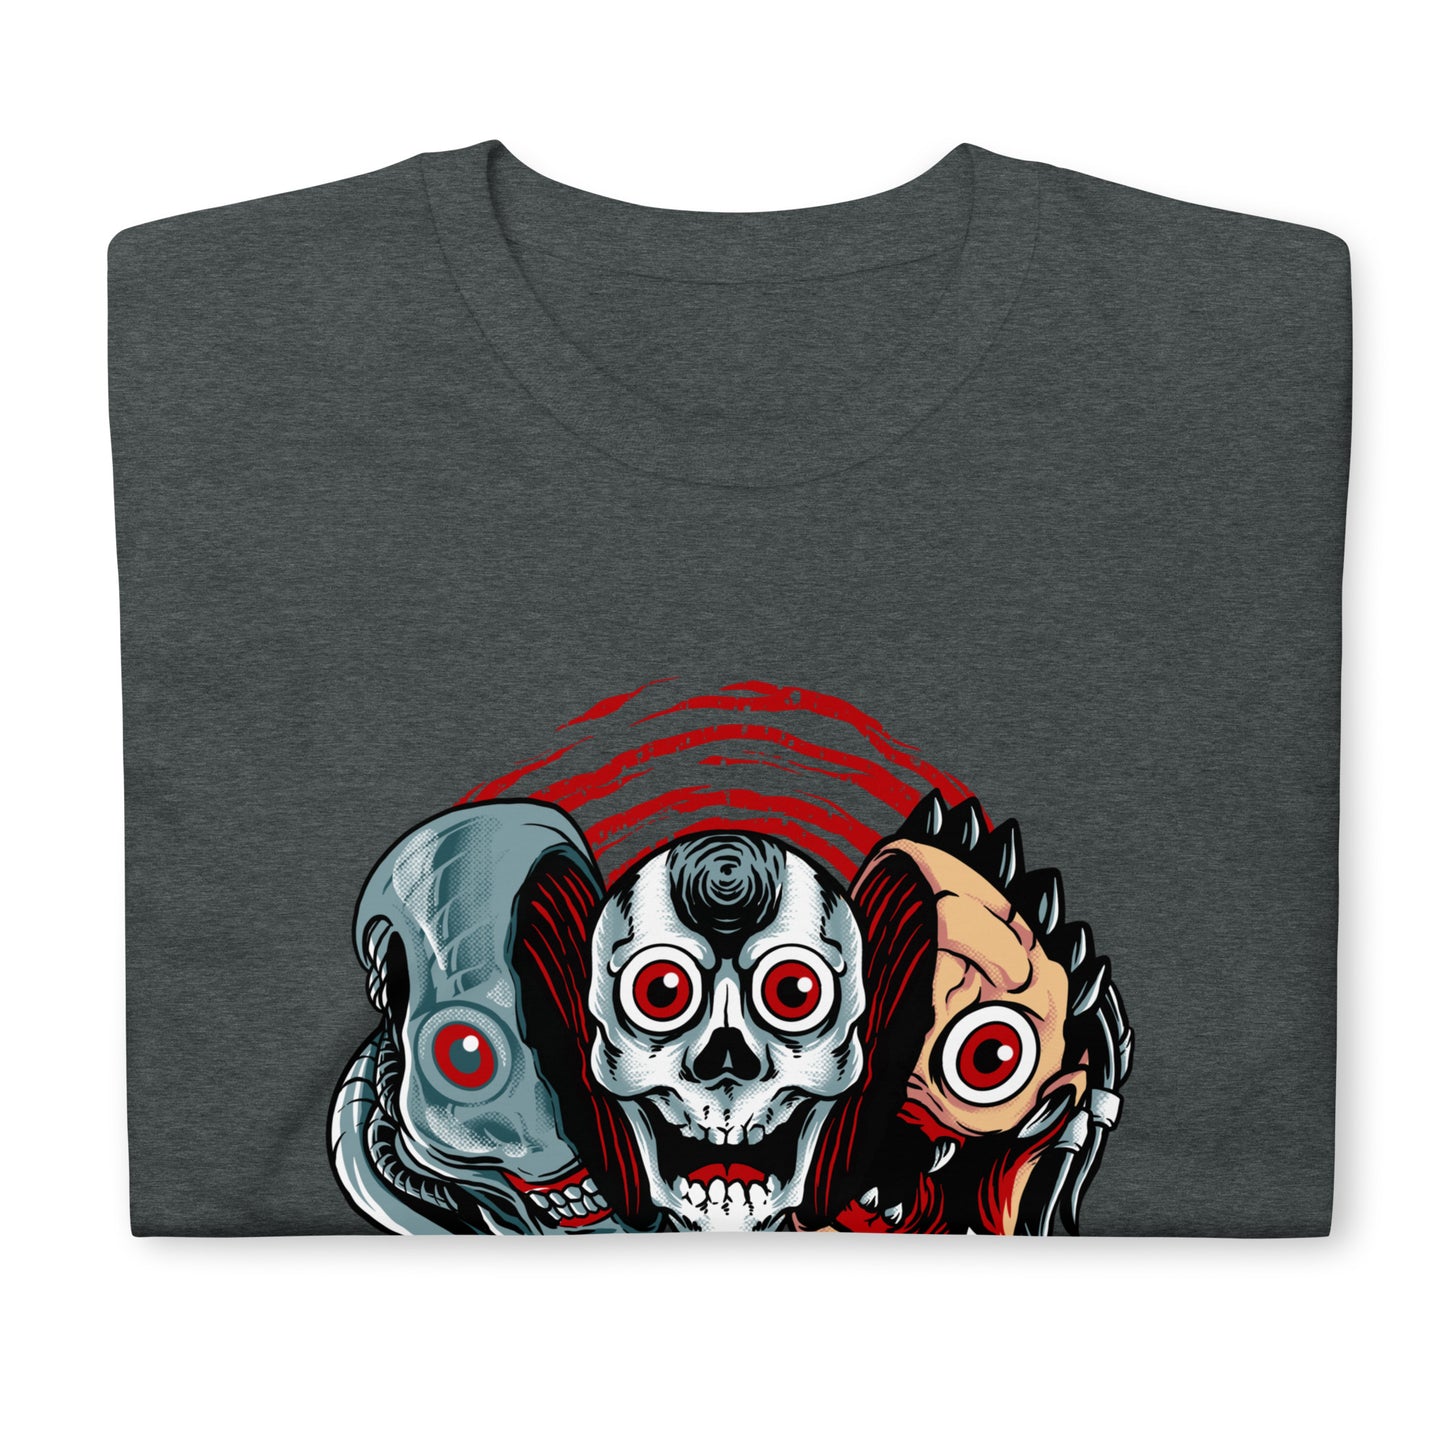 Triple Threat #1 Halloween Unisex T-Shirt